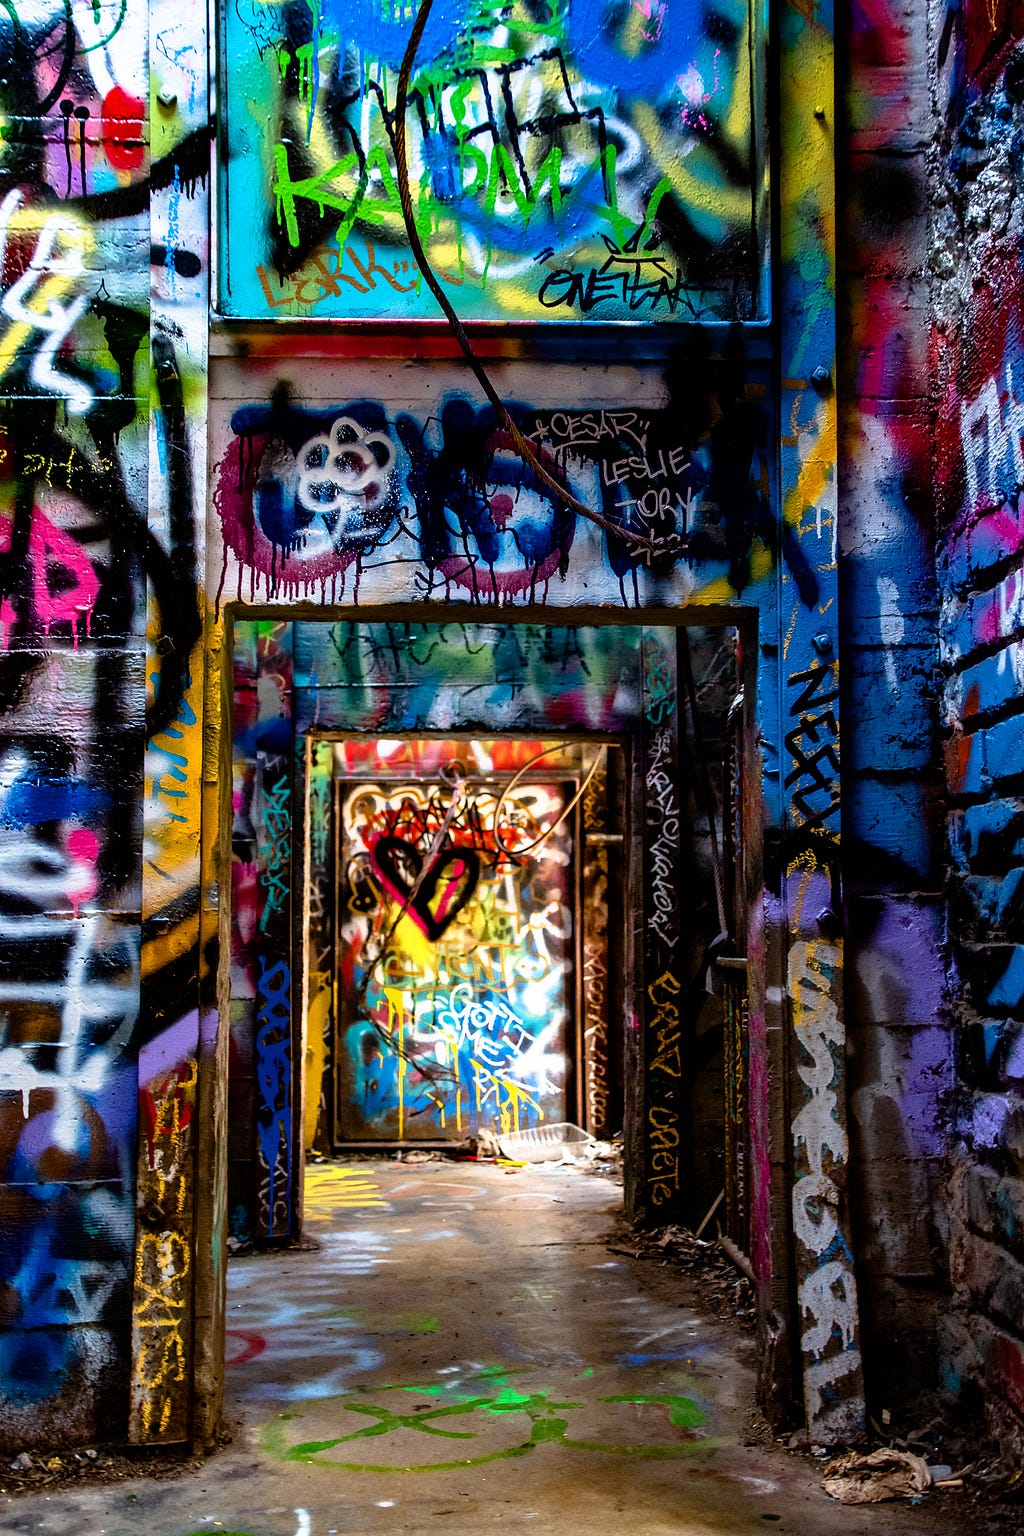 Colourful Graffiti in an Enclosure-Photo by Brandon Olafsson